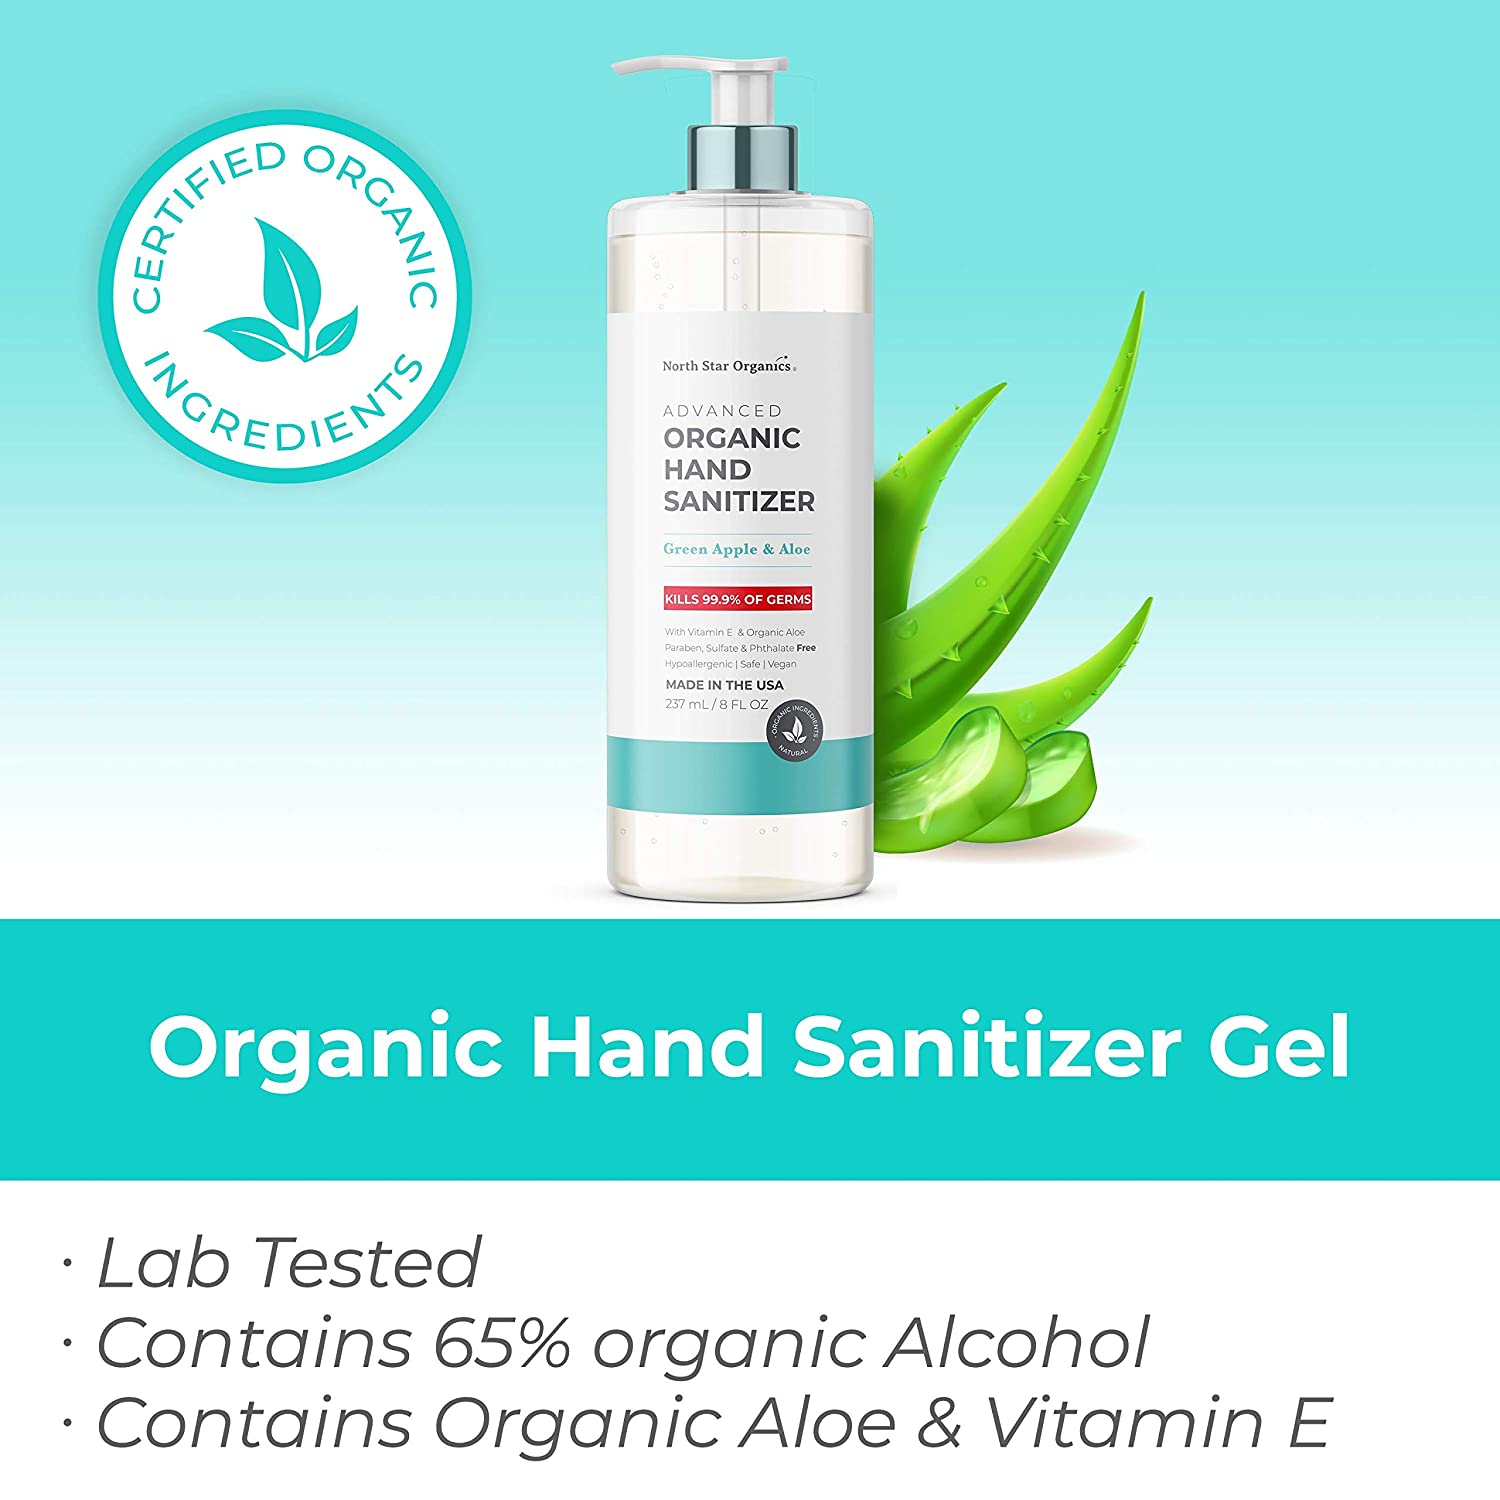 Non-toxic hand sanitizer brand North Star Organics